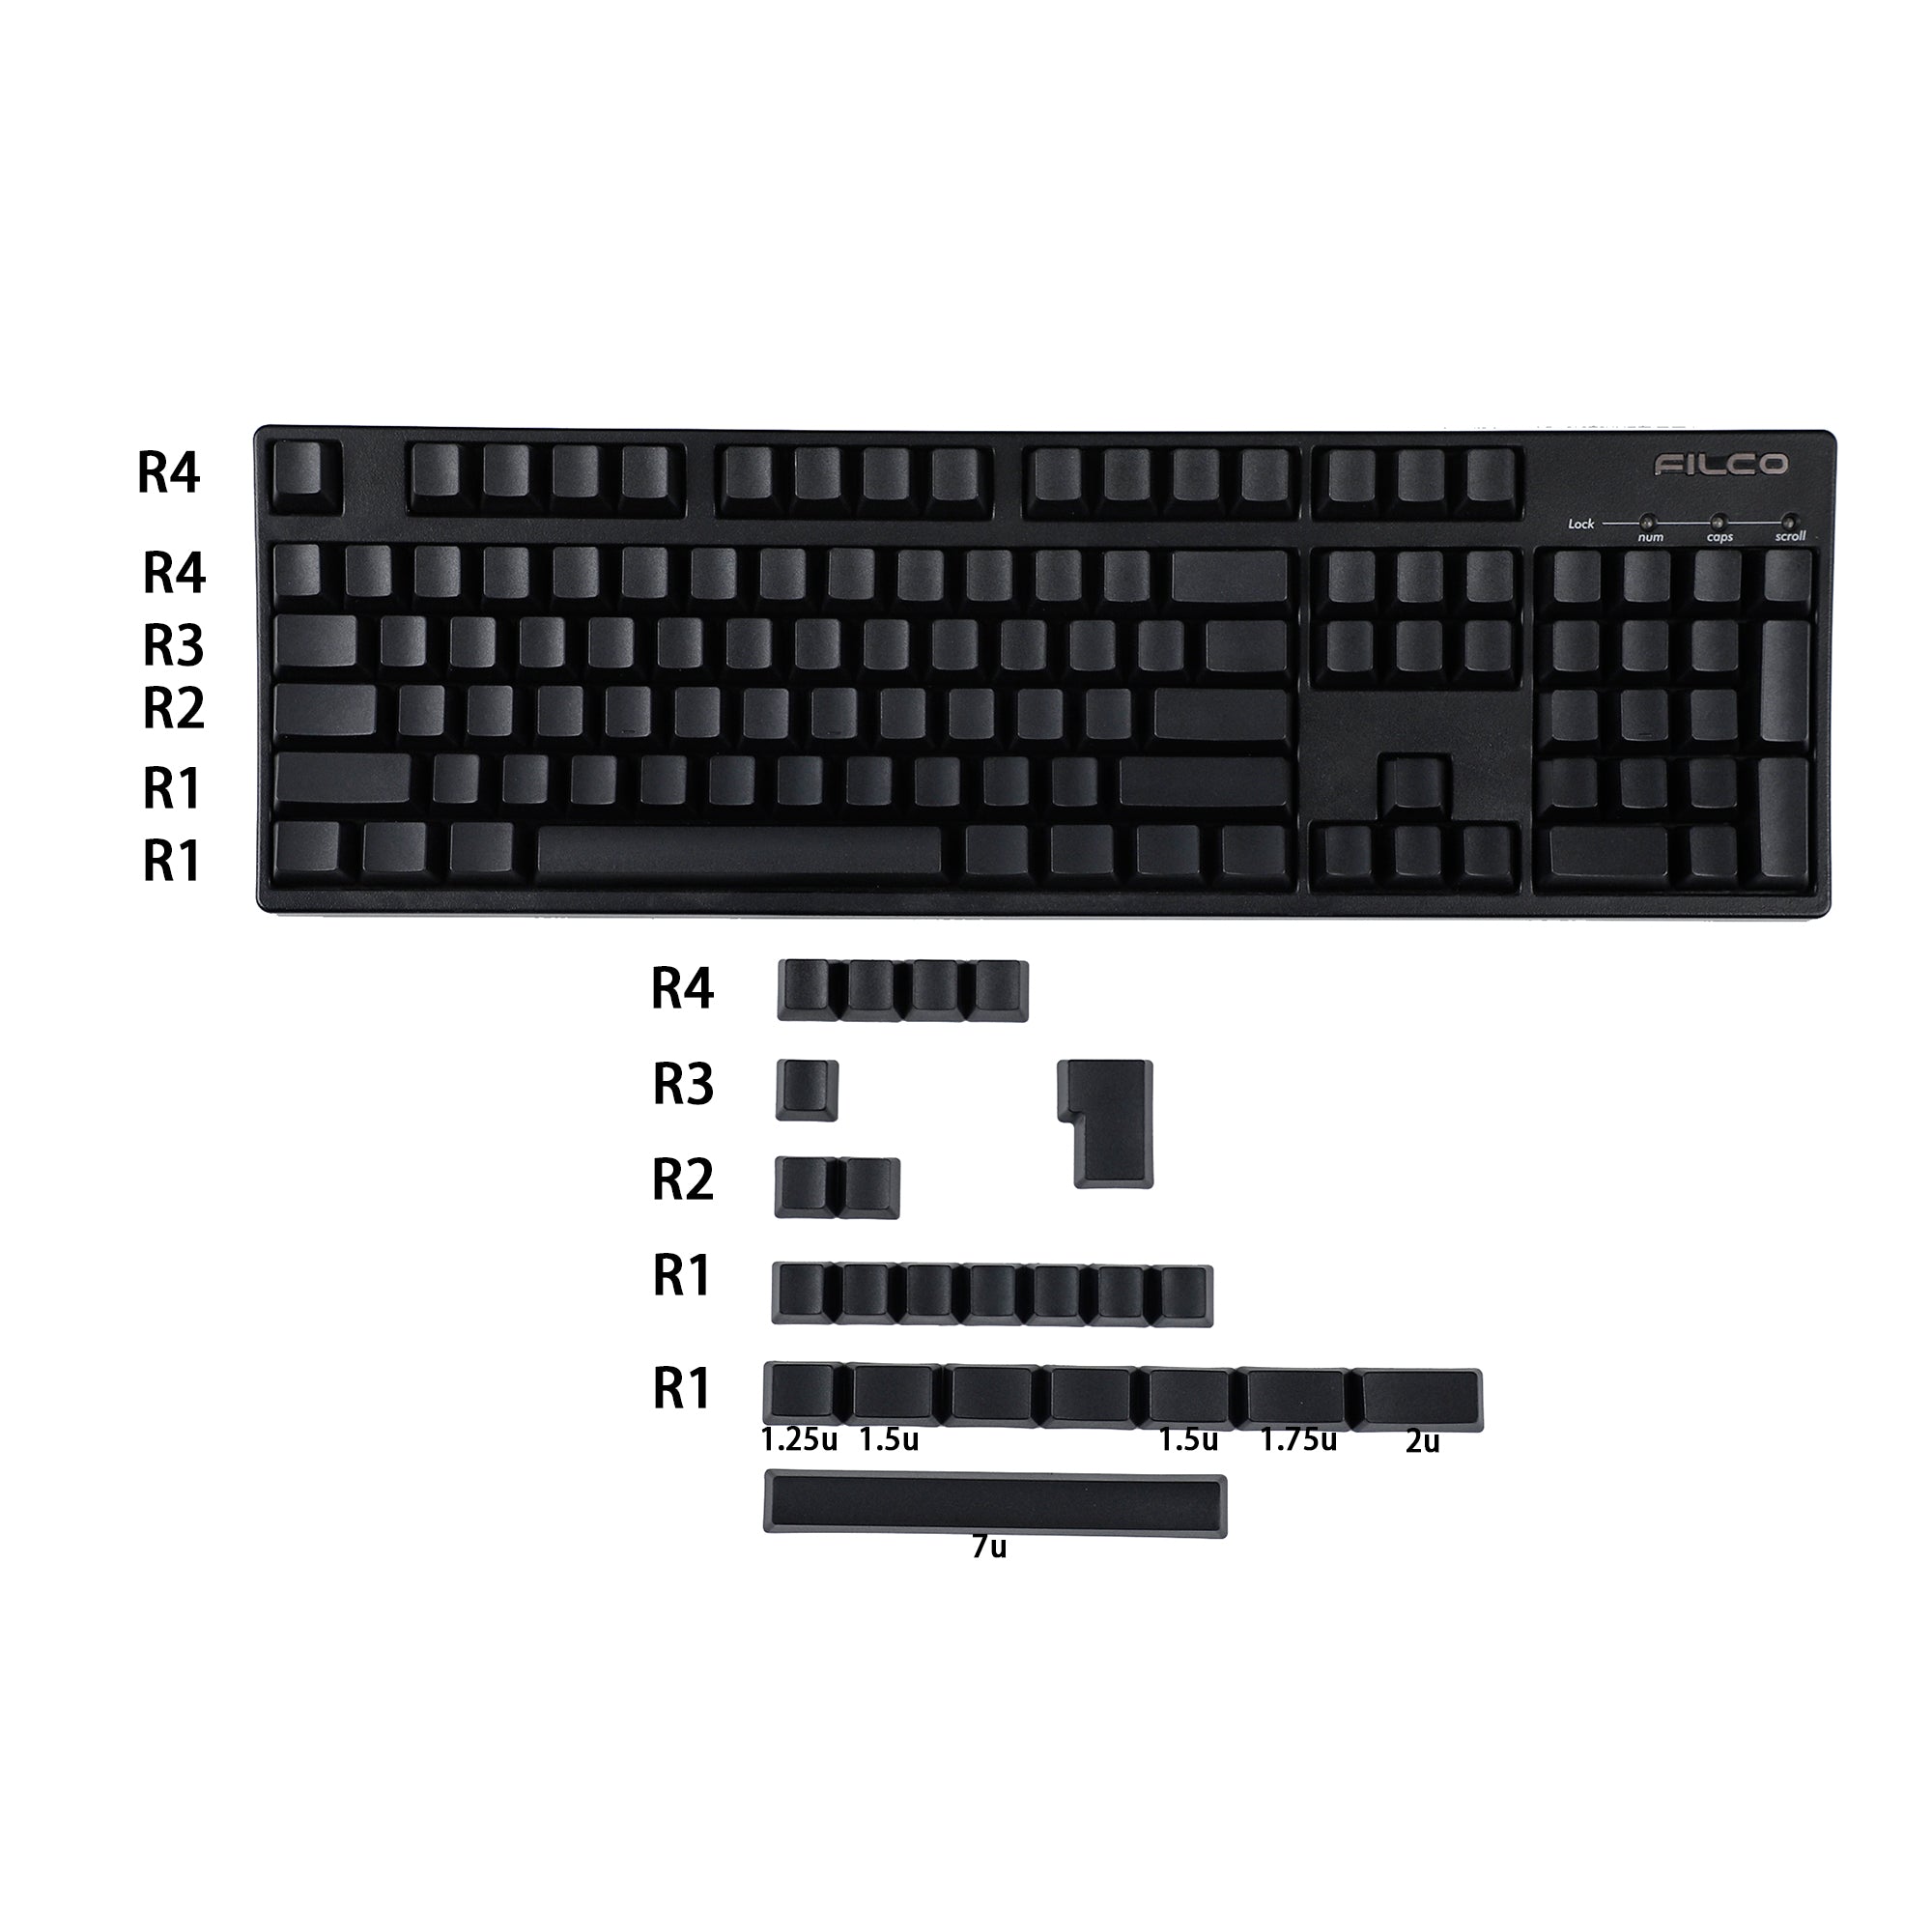 Pbt Abspbt Spanish Keycaps For Mechanical Keyboards - 112-key